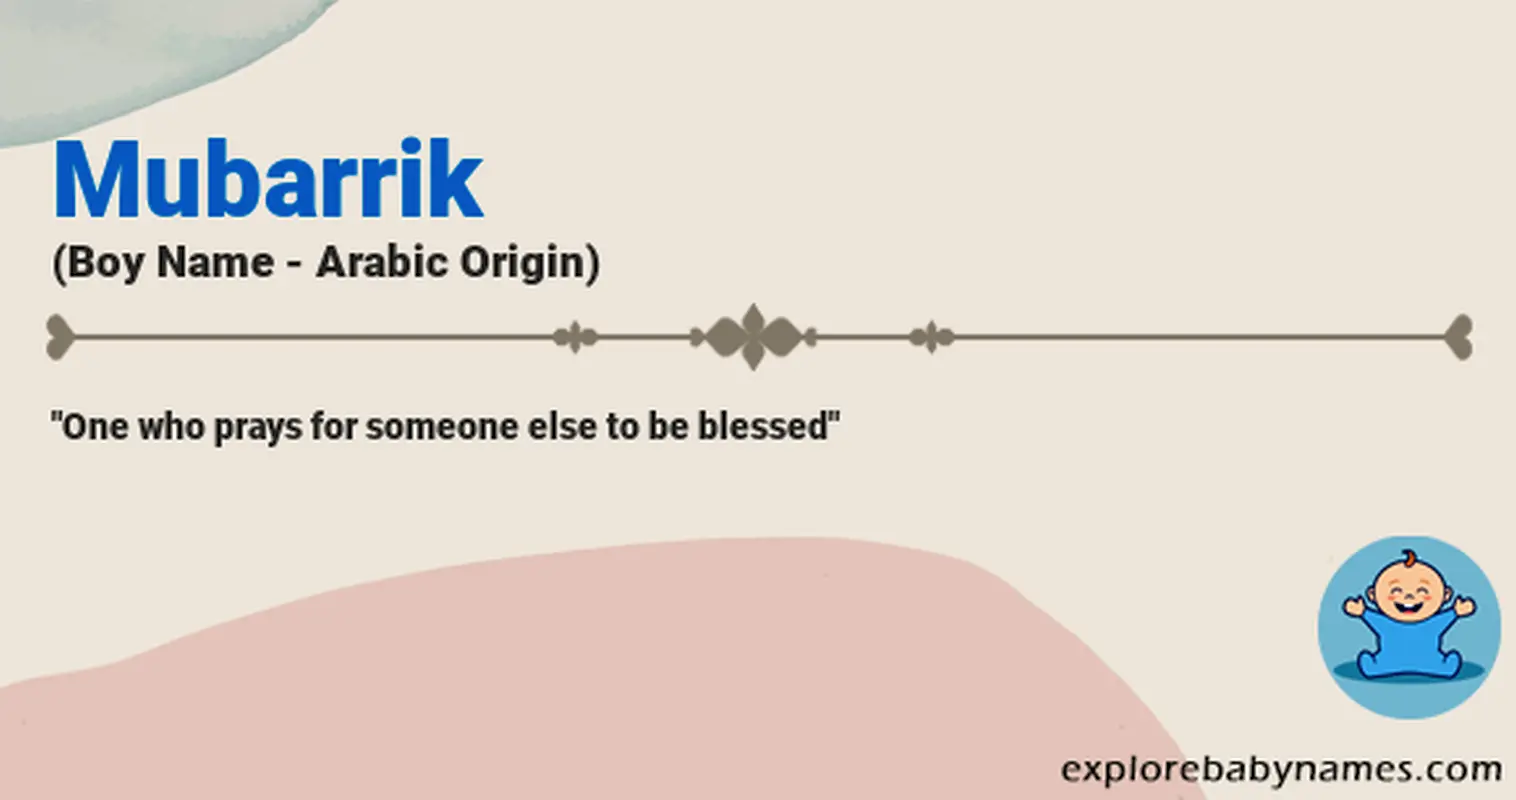 Meaning of Mubarrik